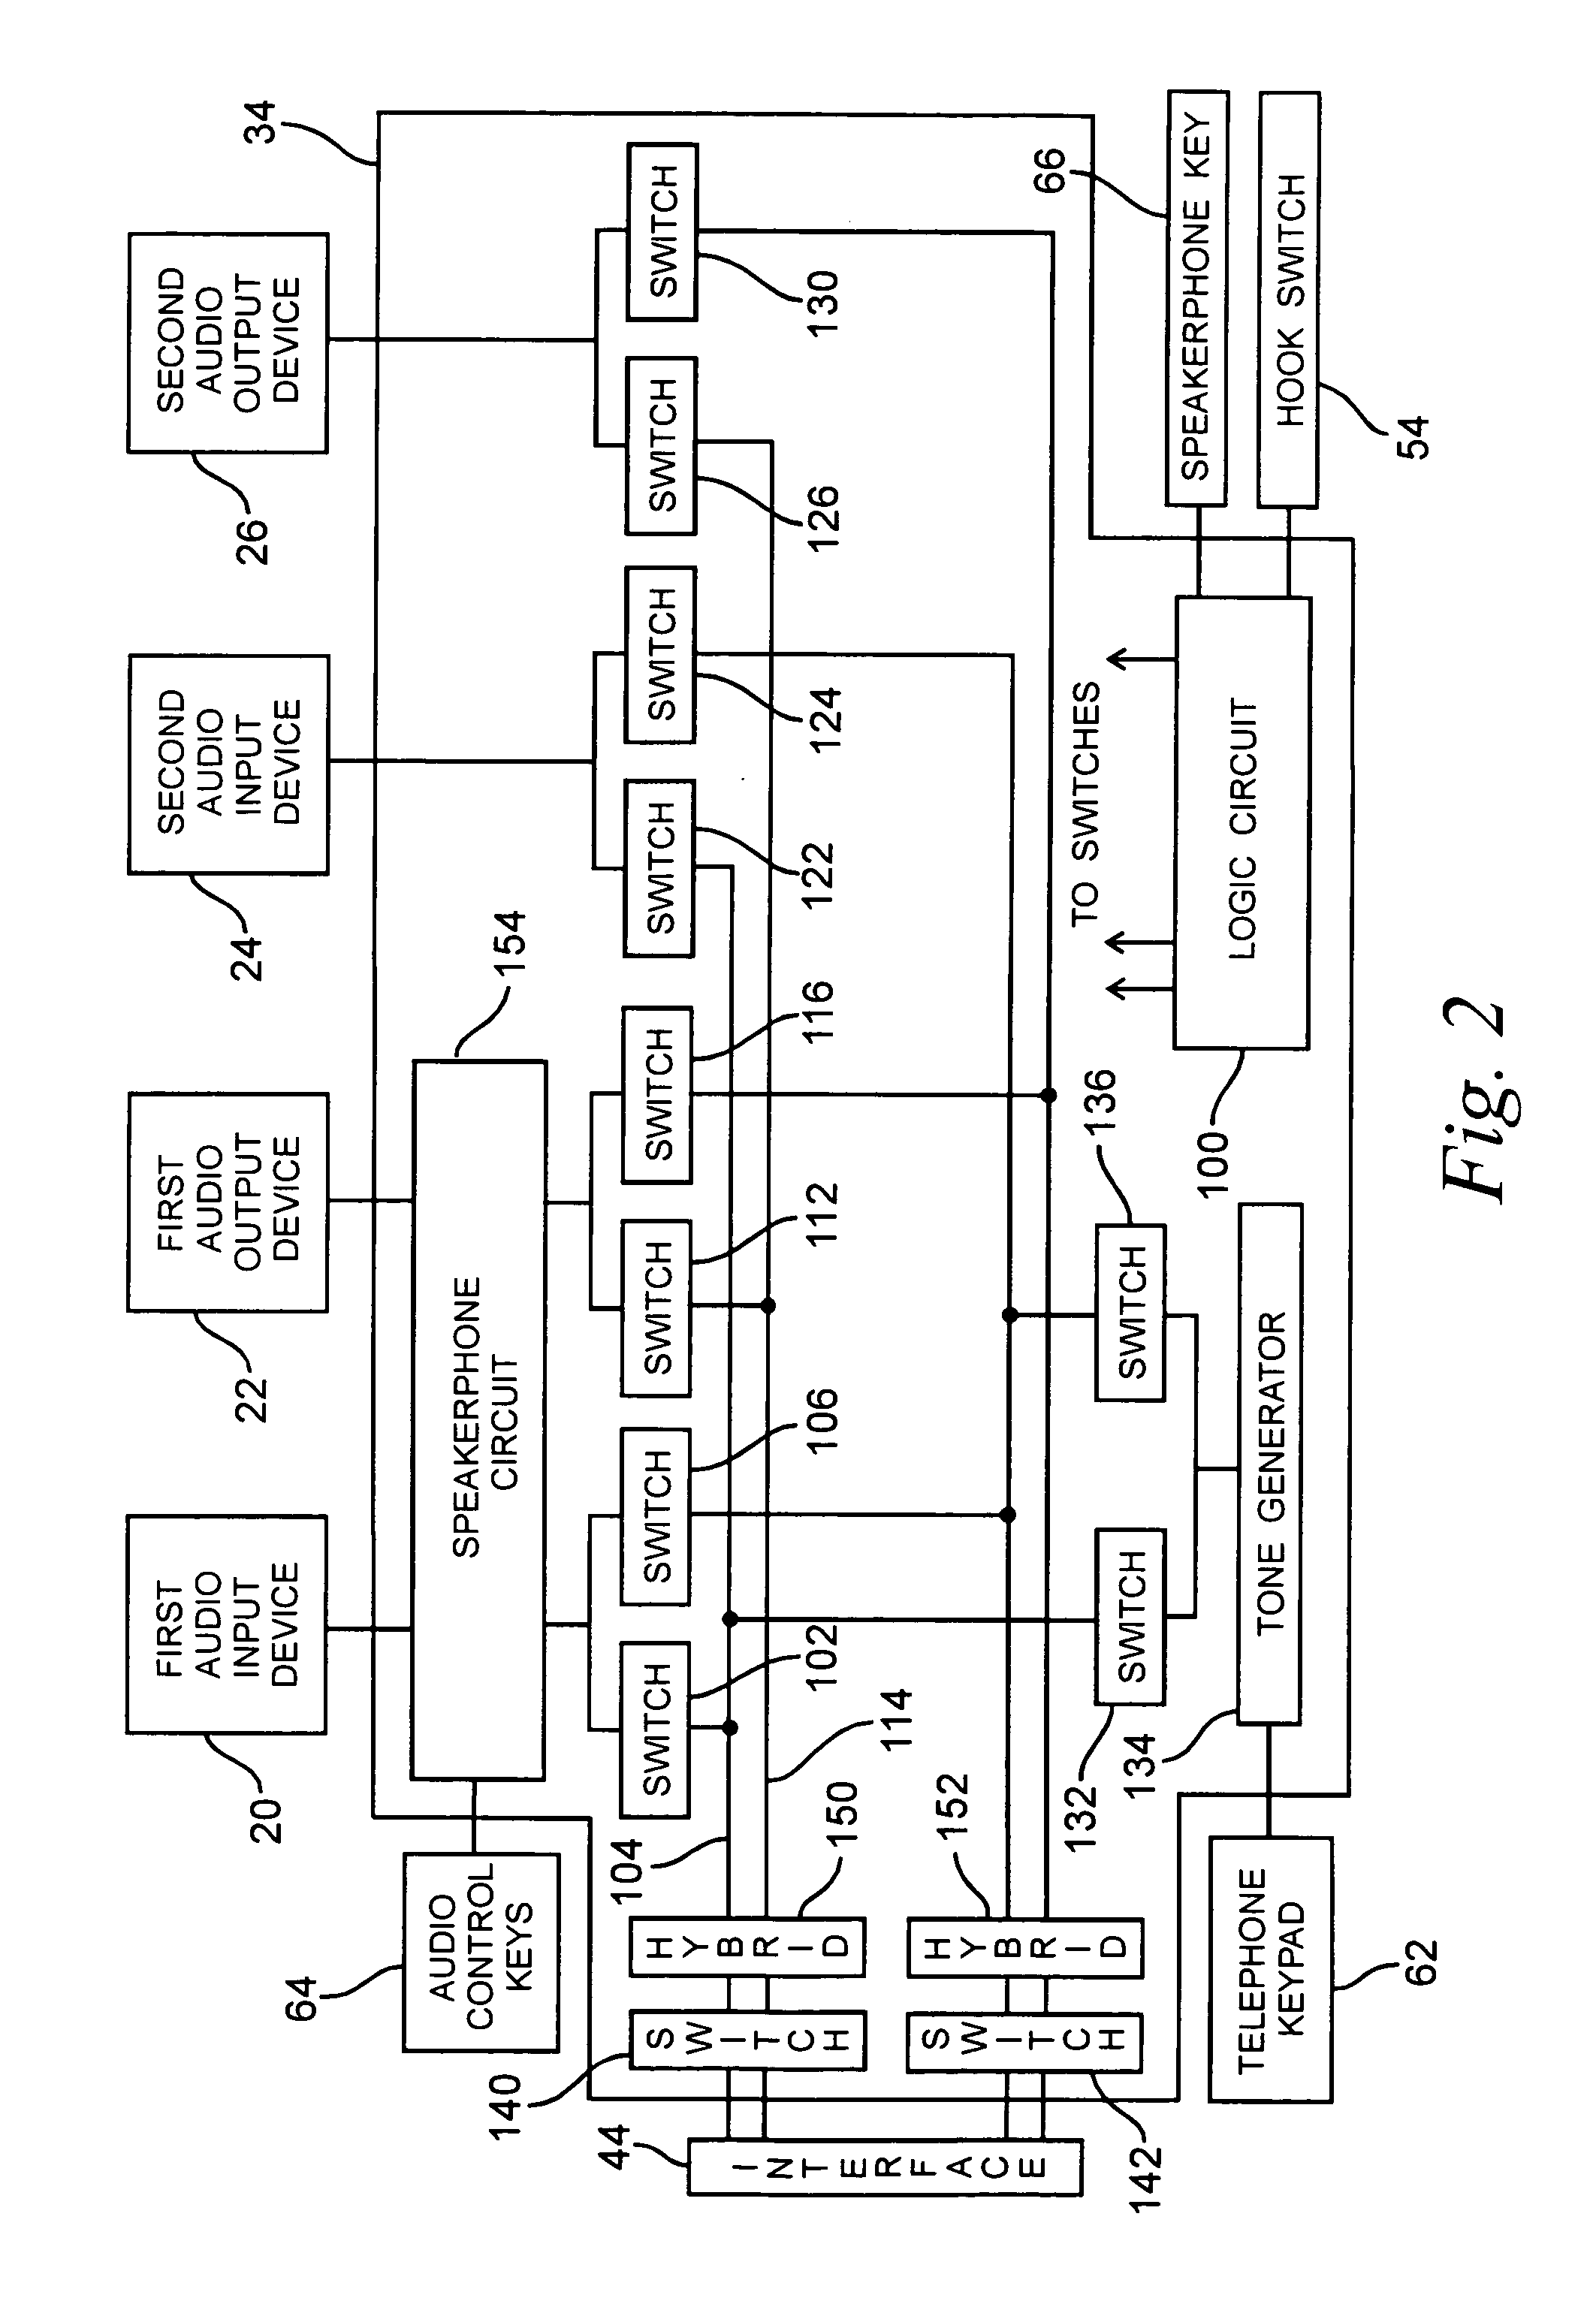 Telephone terminal apparatus and method